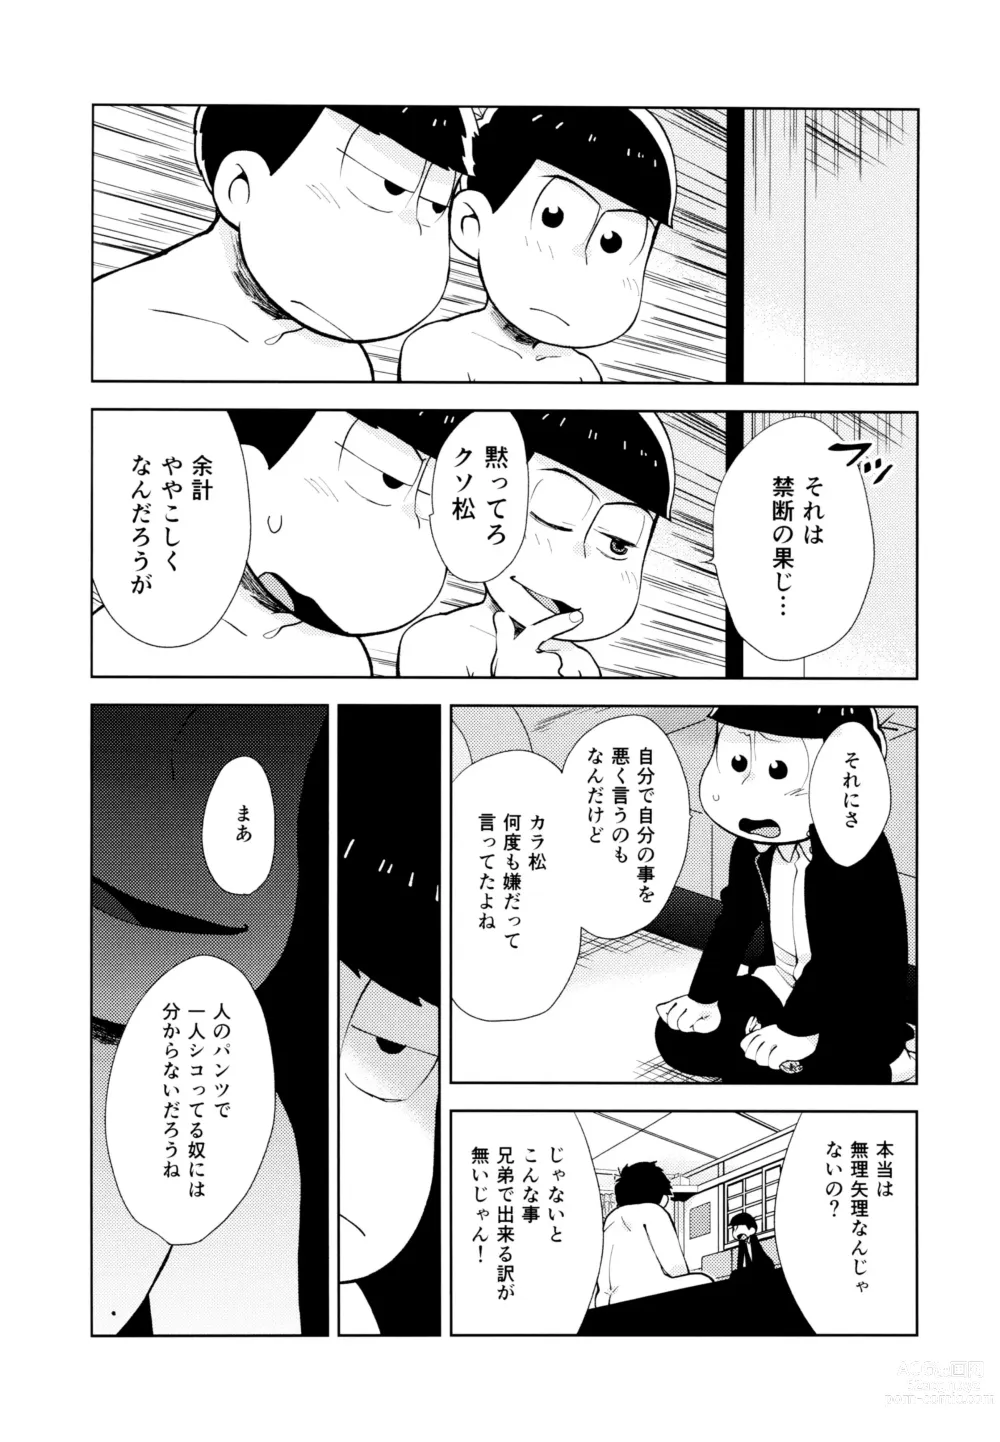 Page 13 of doujinshi Chotto Abunai Time Slip